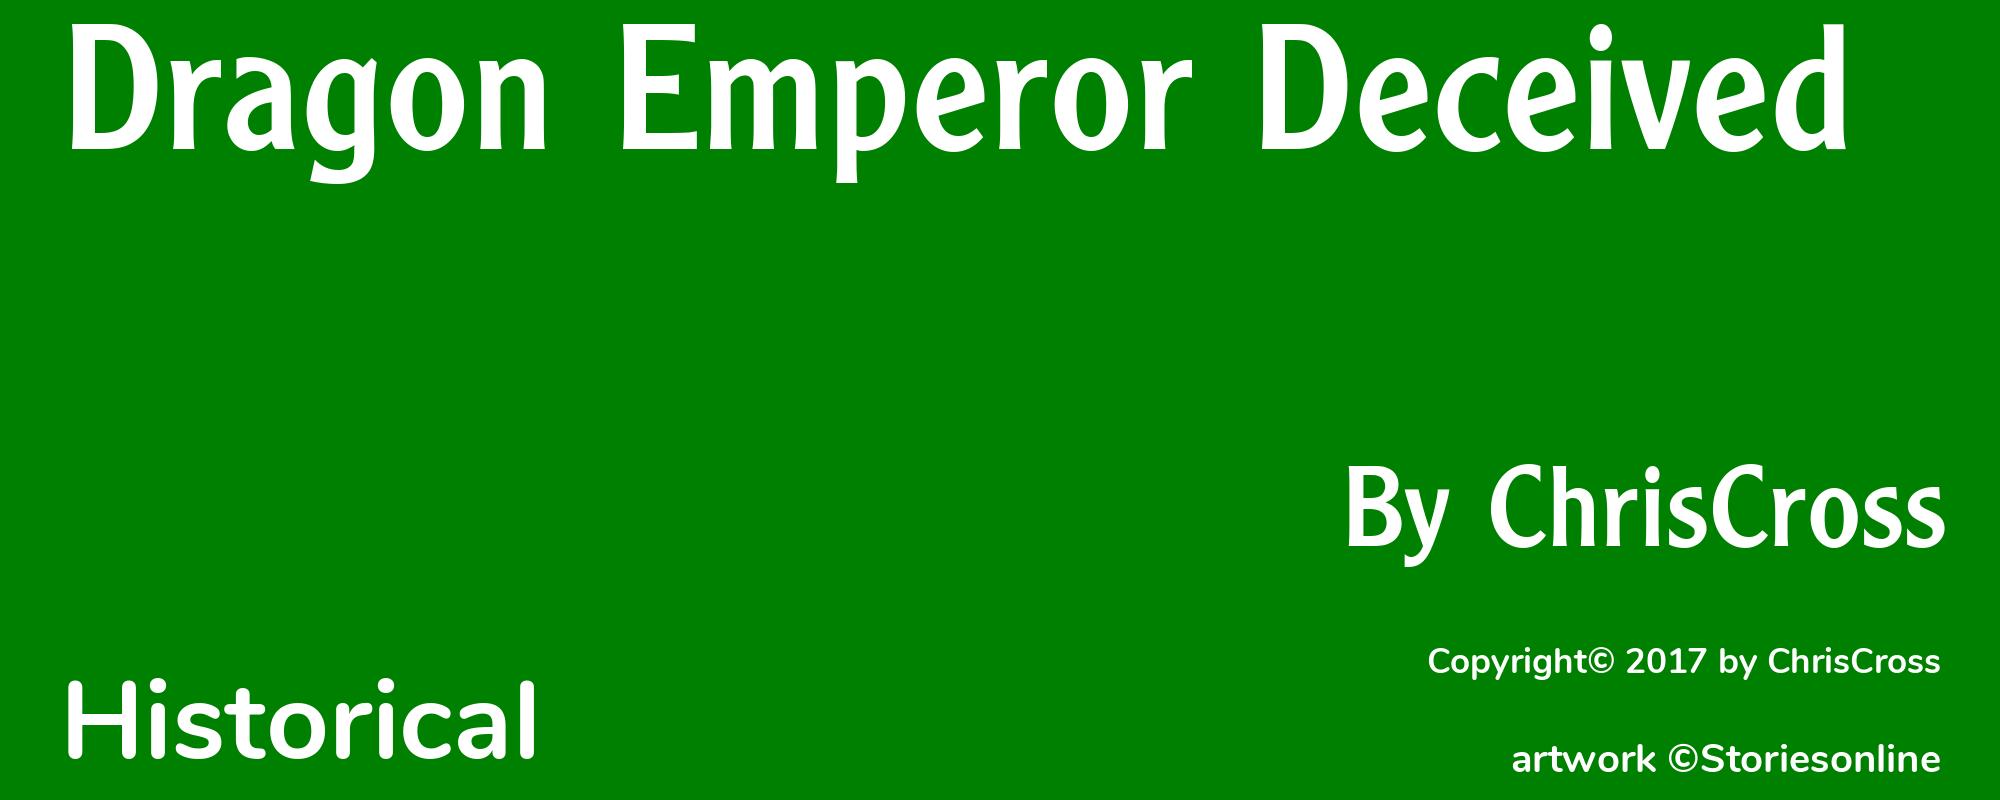 Dragon Emperor Deceived - Cover